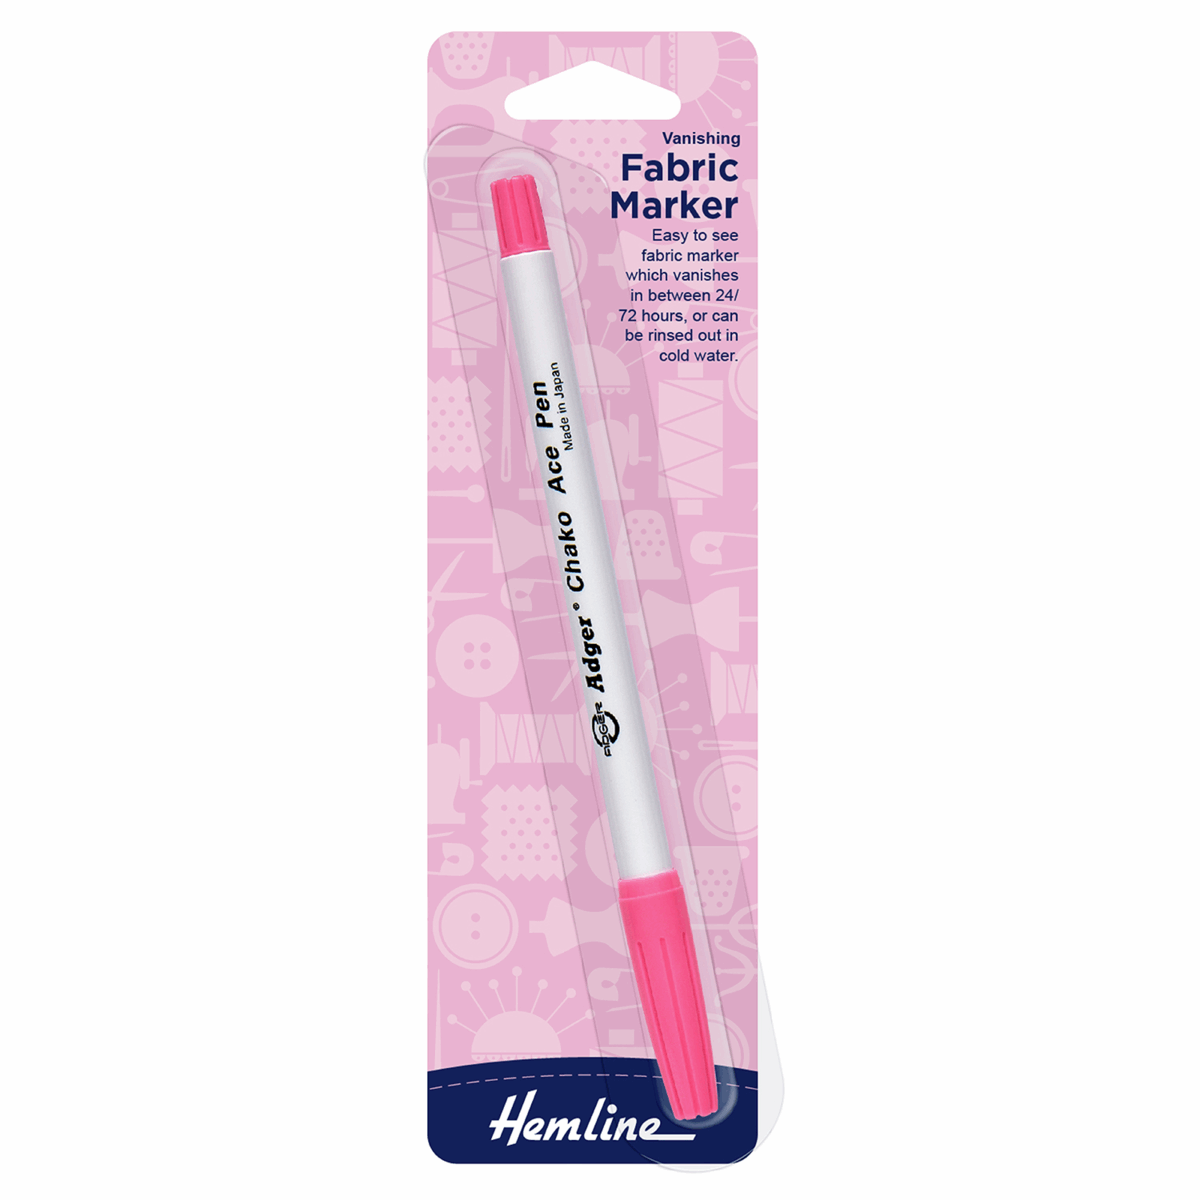 Wipe Off/Vanishing Fabric Marker Pen